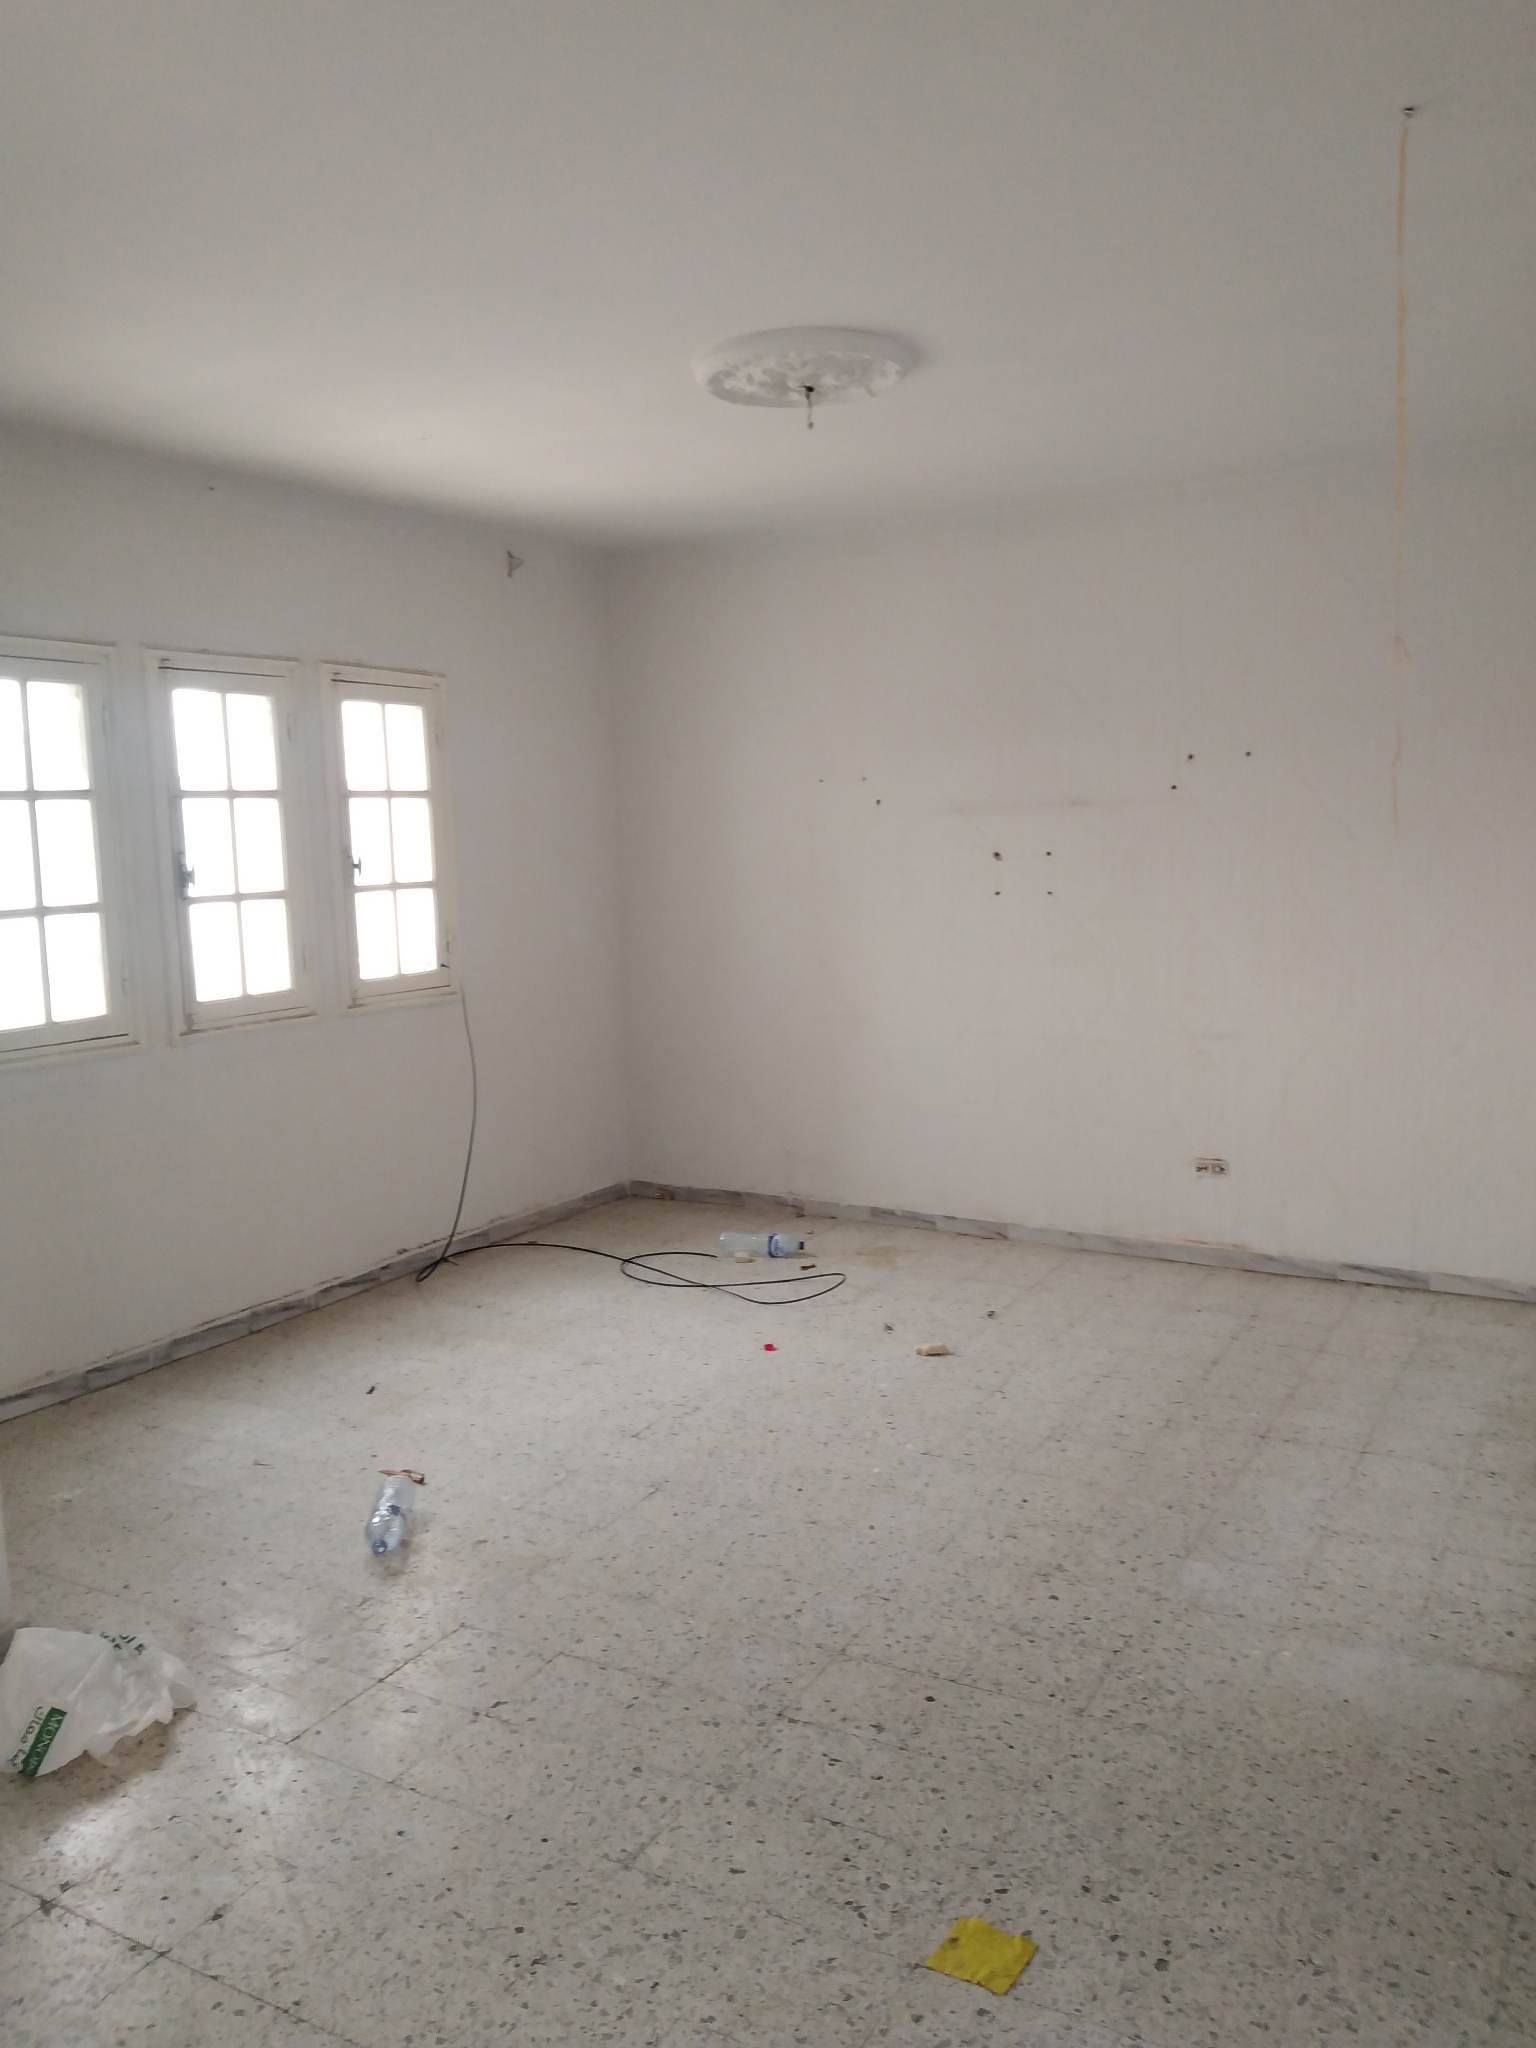 Sousse Jaouhara Cite Sidi Abdelhamid Vente Appart. 4 pices Appartement  sidi abdelhamid